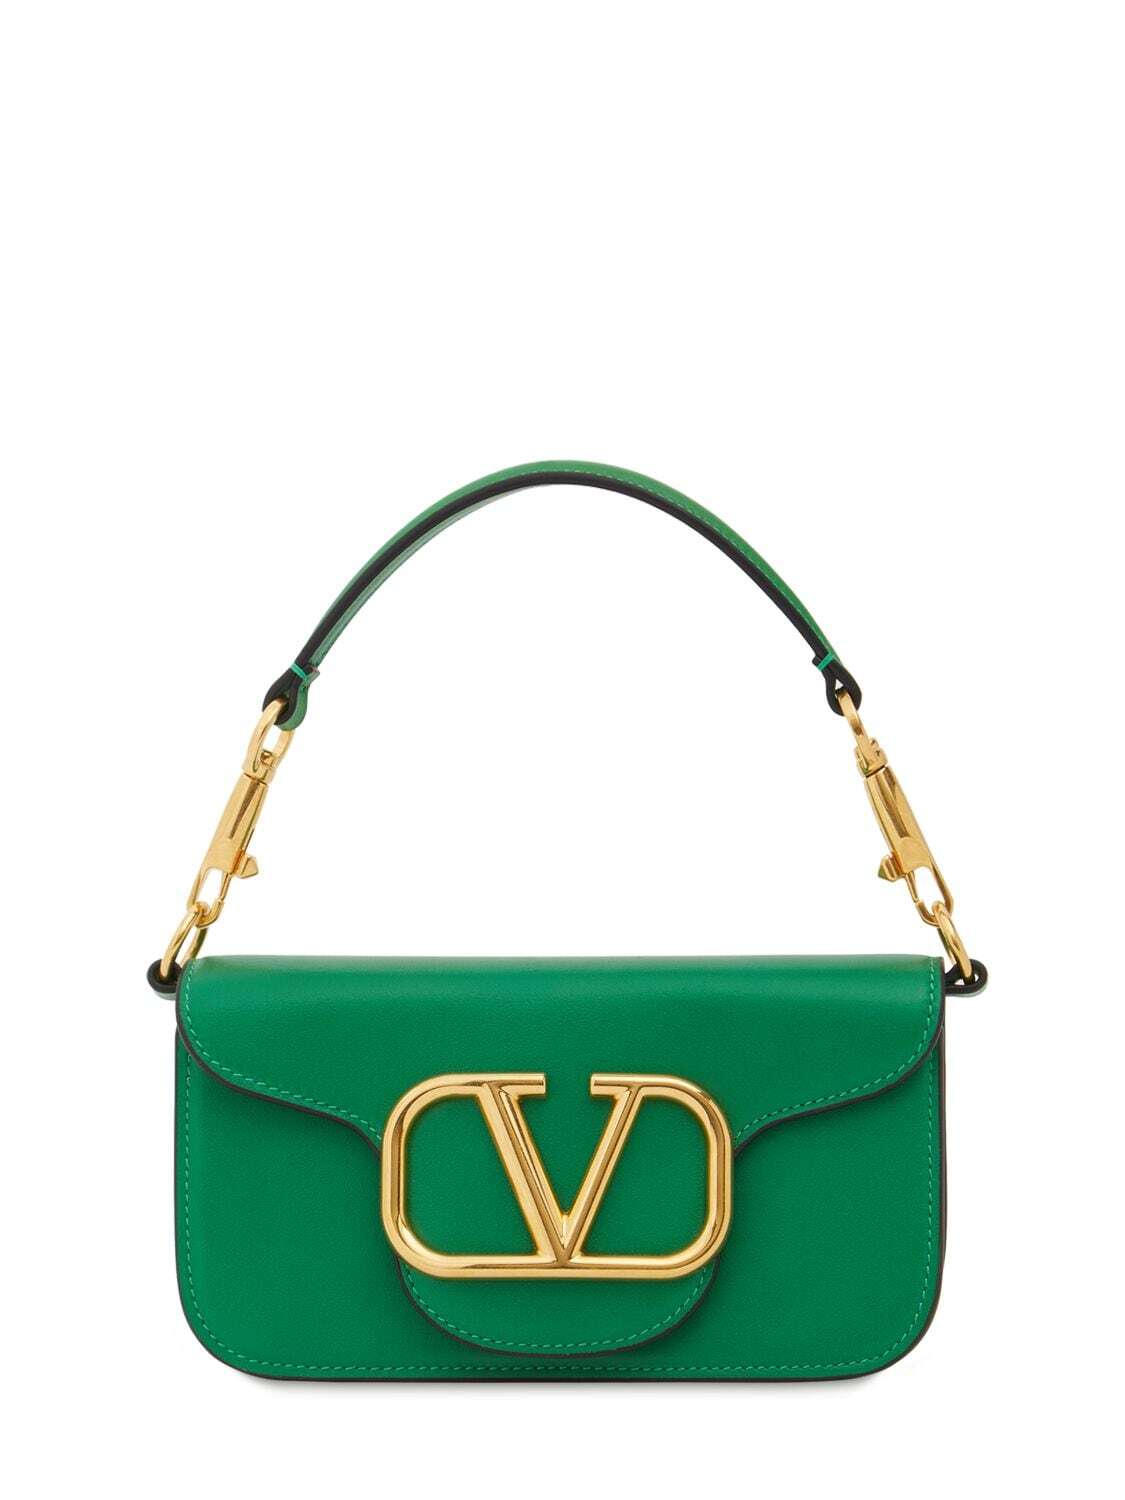 VALENTINO GARAVANI Sm Locò Leather Shoulder Bag in green